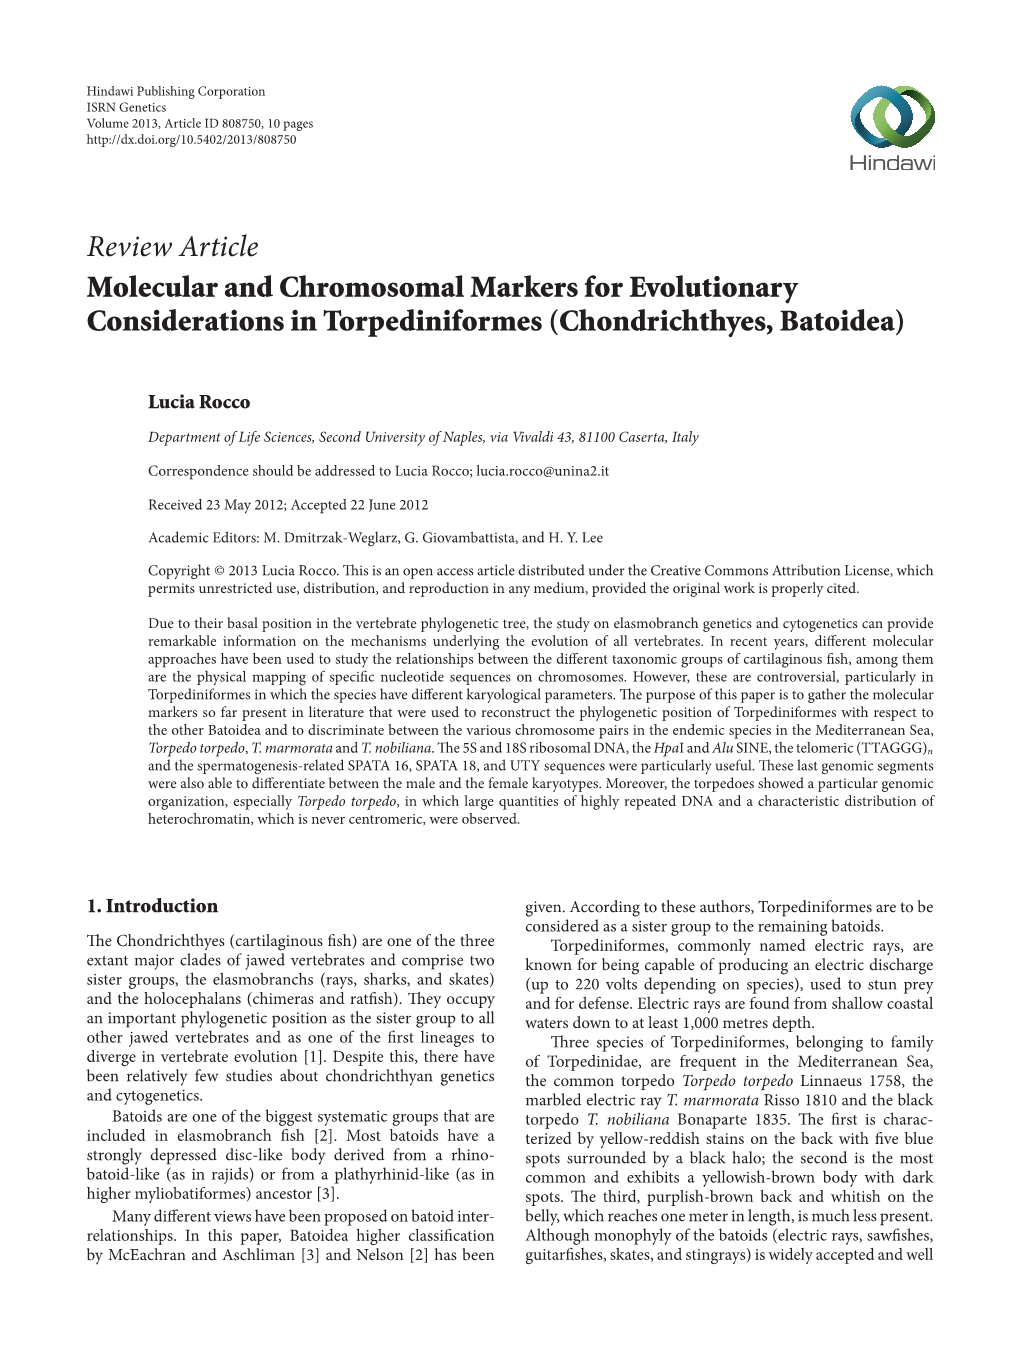 Molecular and Chromosomal Markers for Evolutionary Considerations in Torpediniformes (Chondrichthyes, Batoidea)